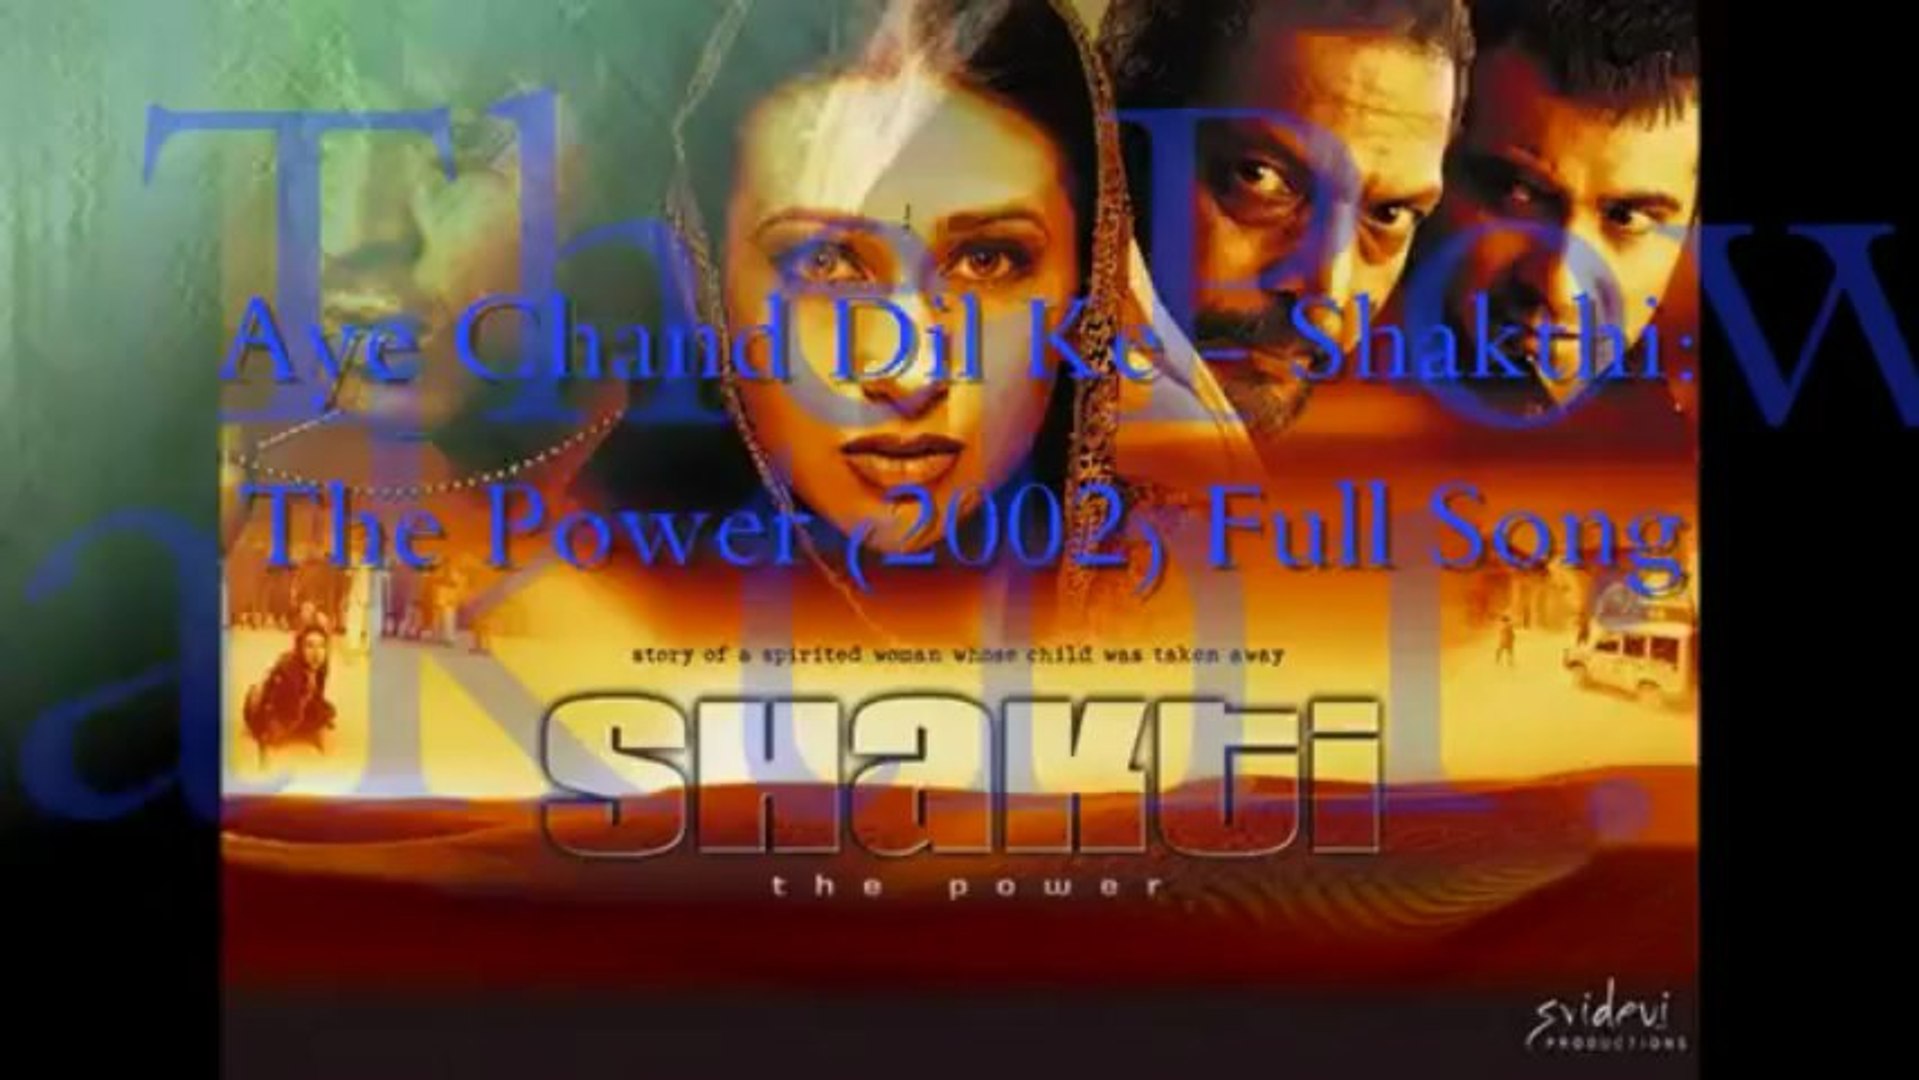 Aye Chand Dil Ke - Shakthi: The Power (2002) Full Song - video Dailymotion